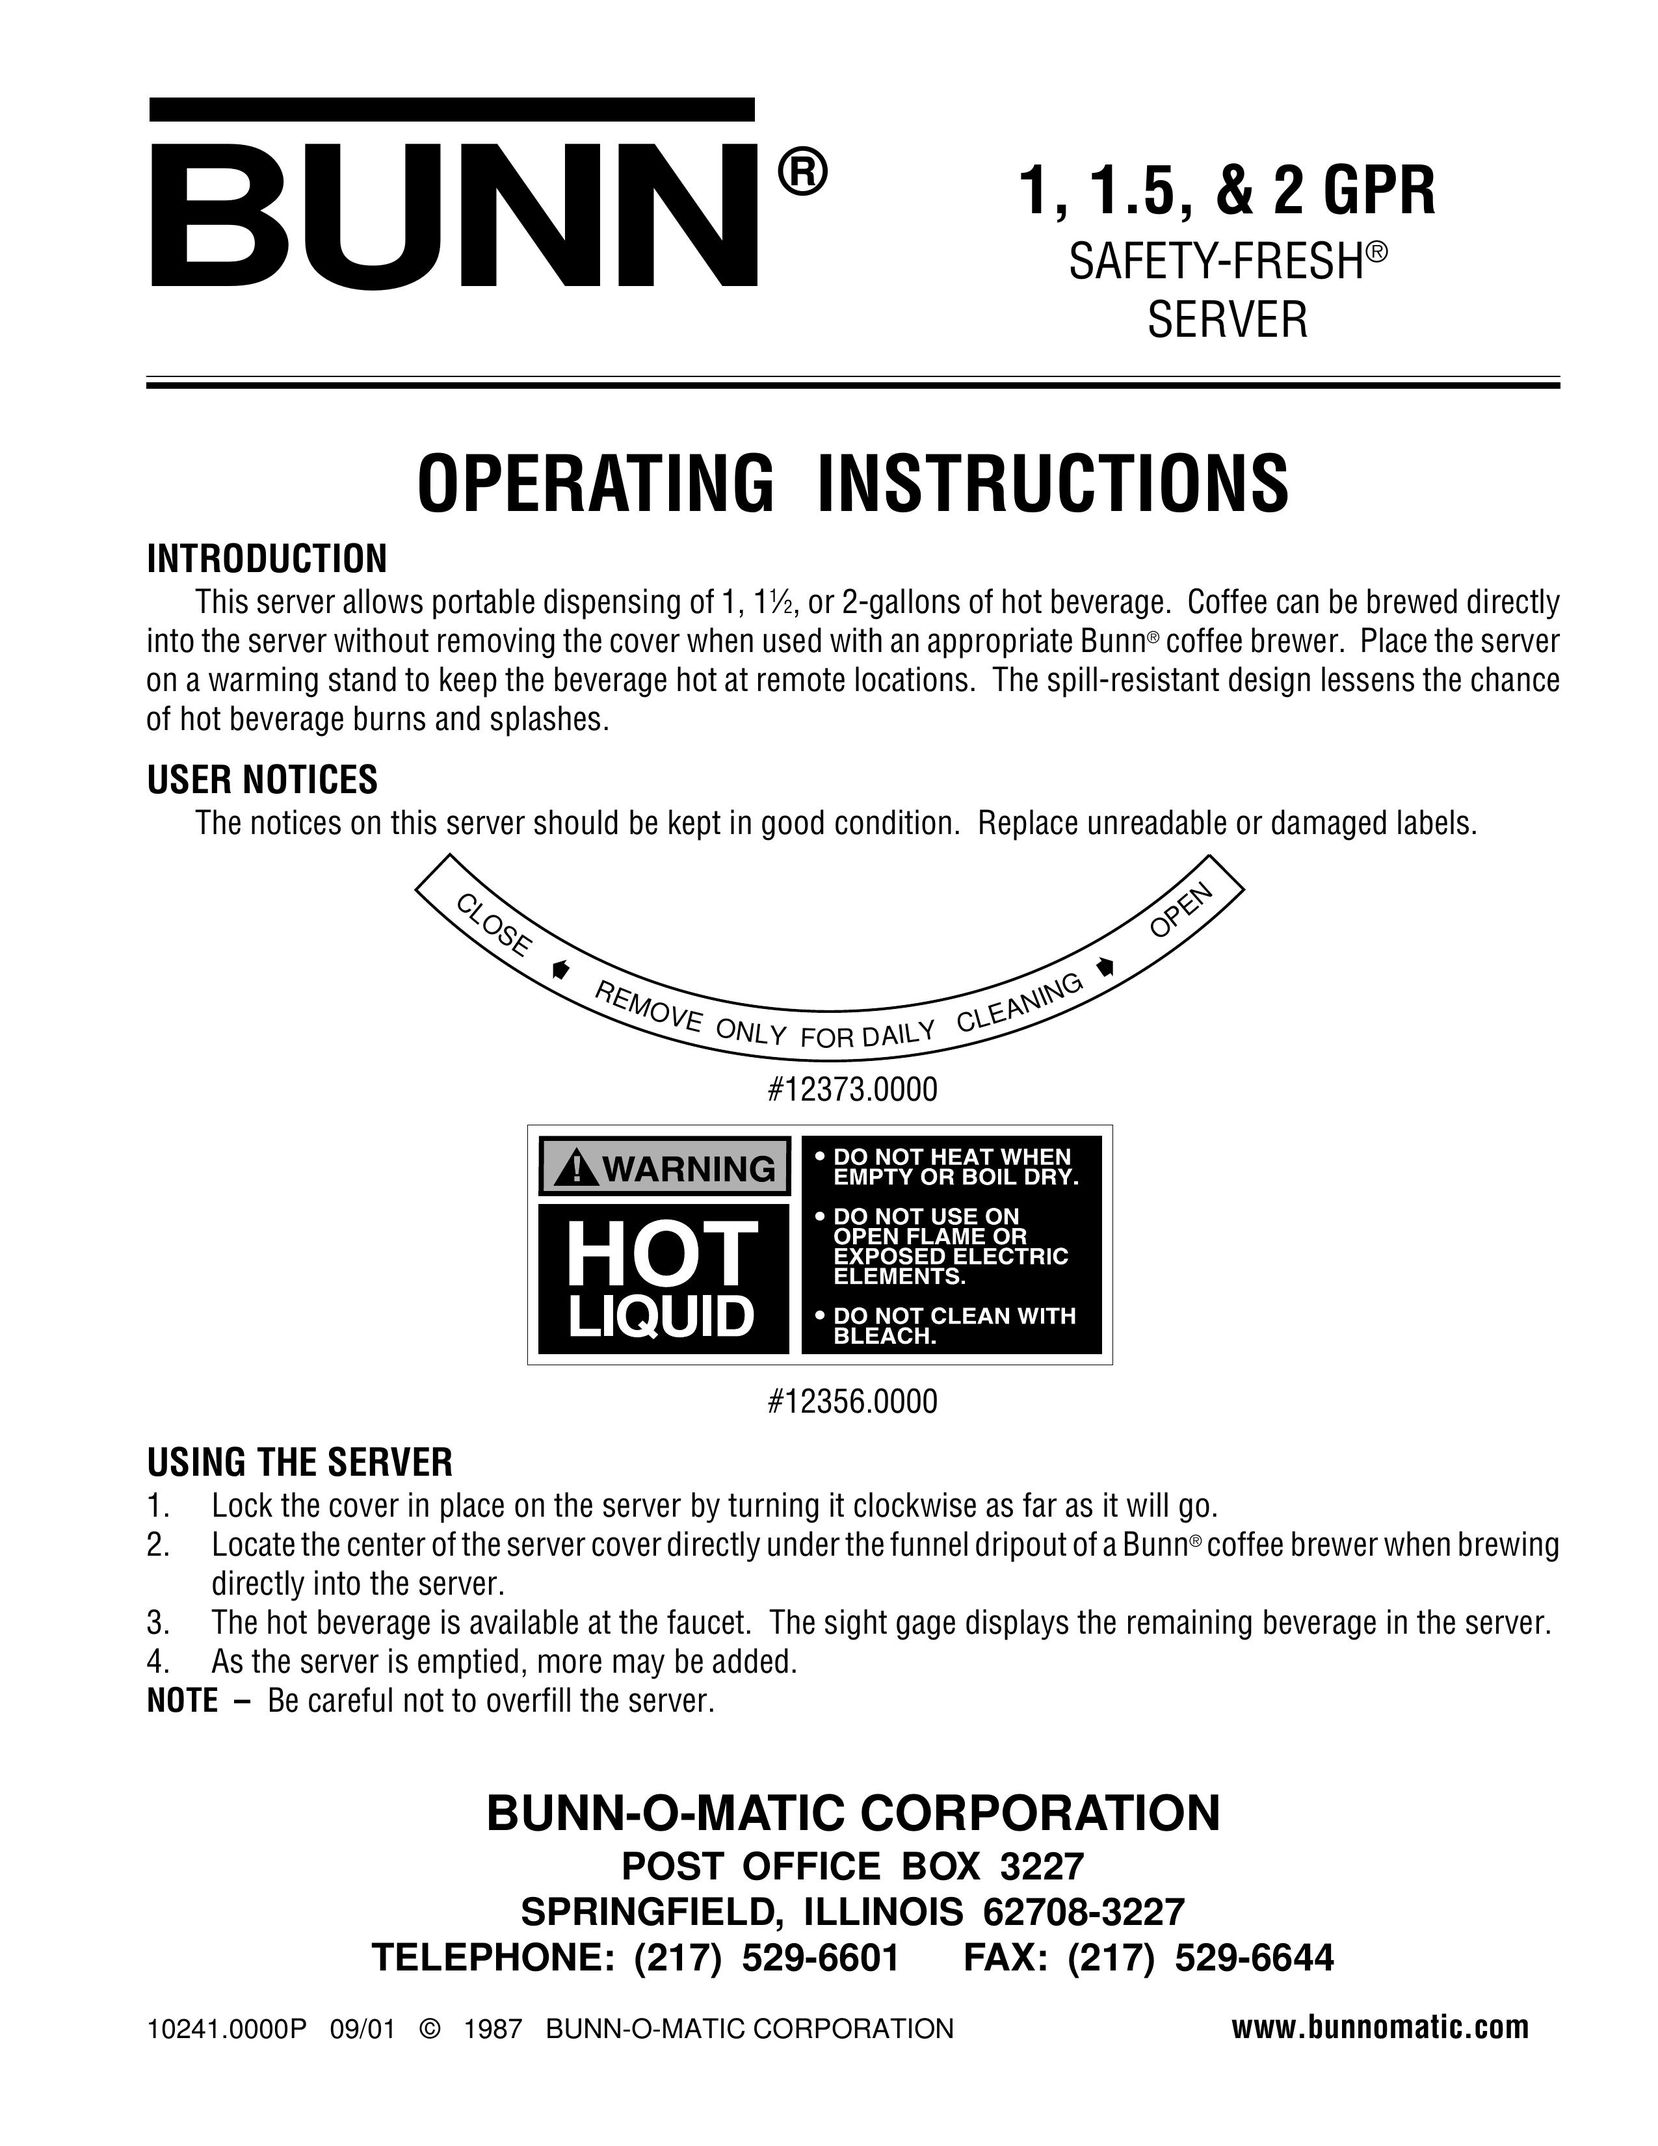 Bunn 1 GPR Coffee Grinder User Manual